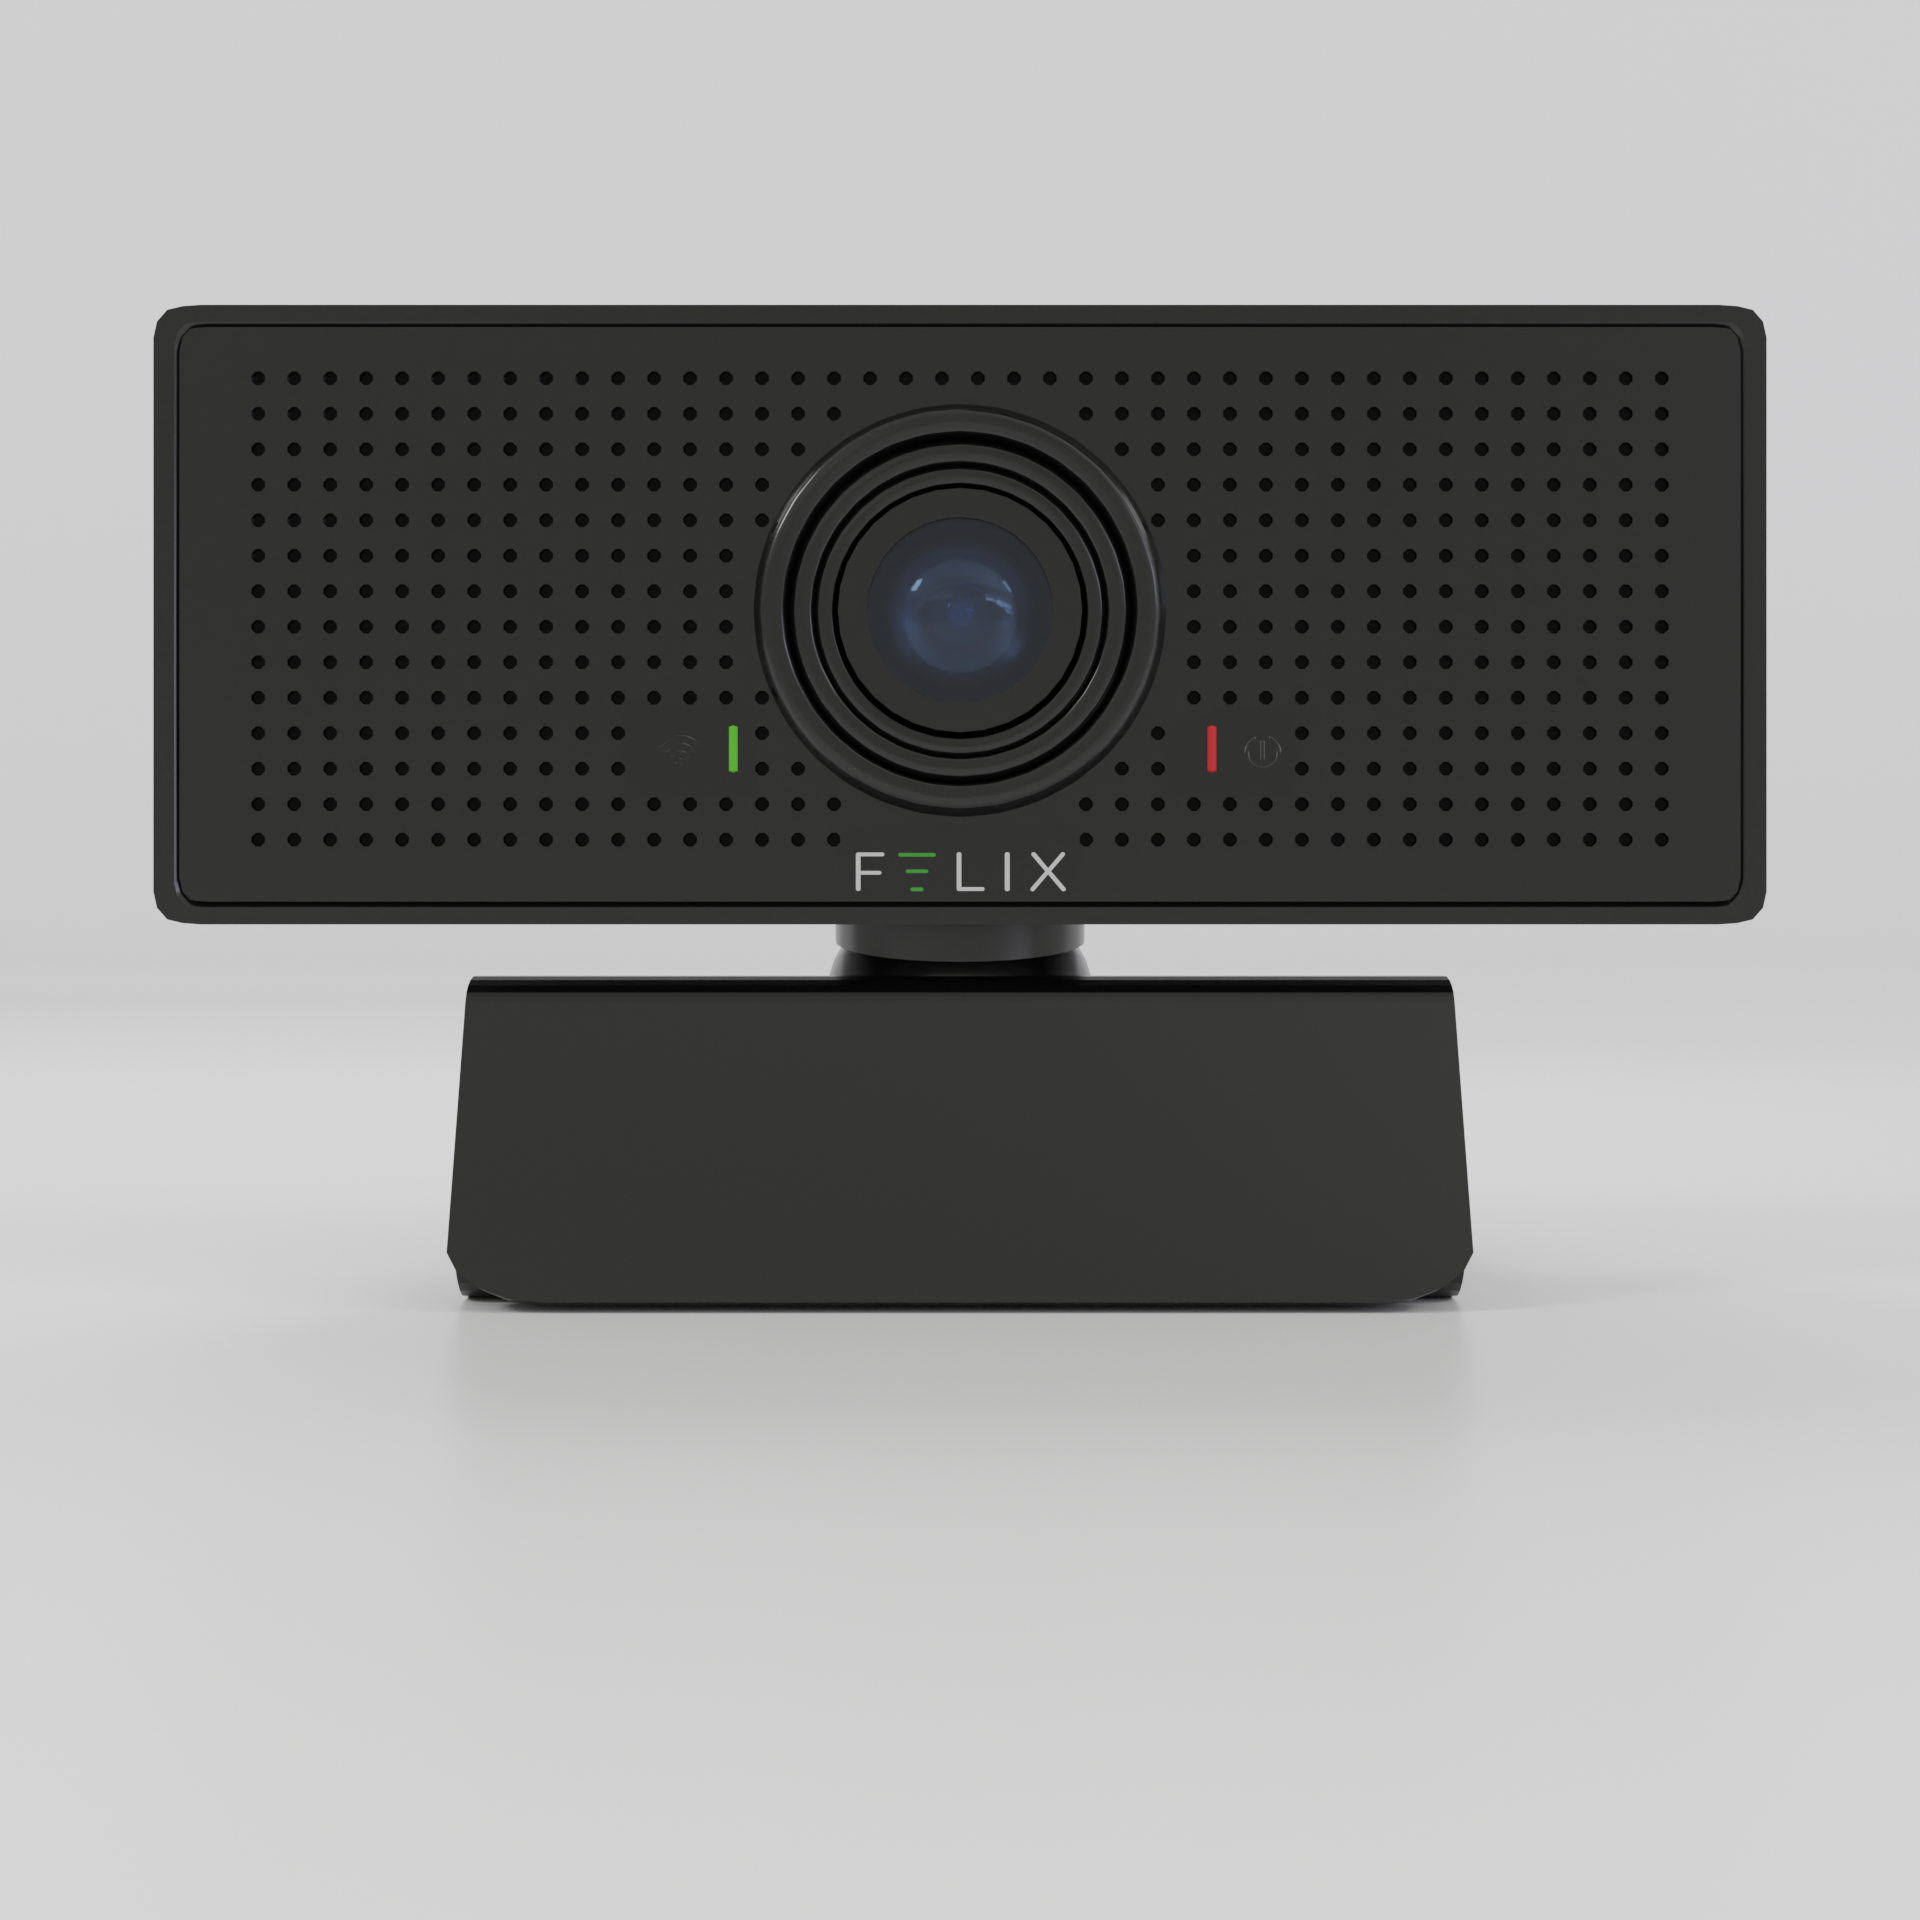 The Felix Smart 1080p HD Cam is shown.